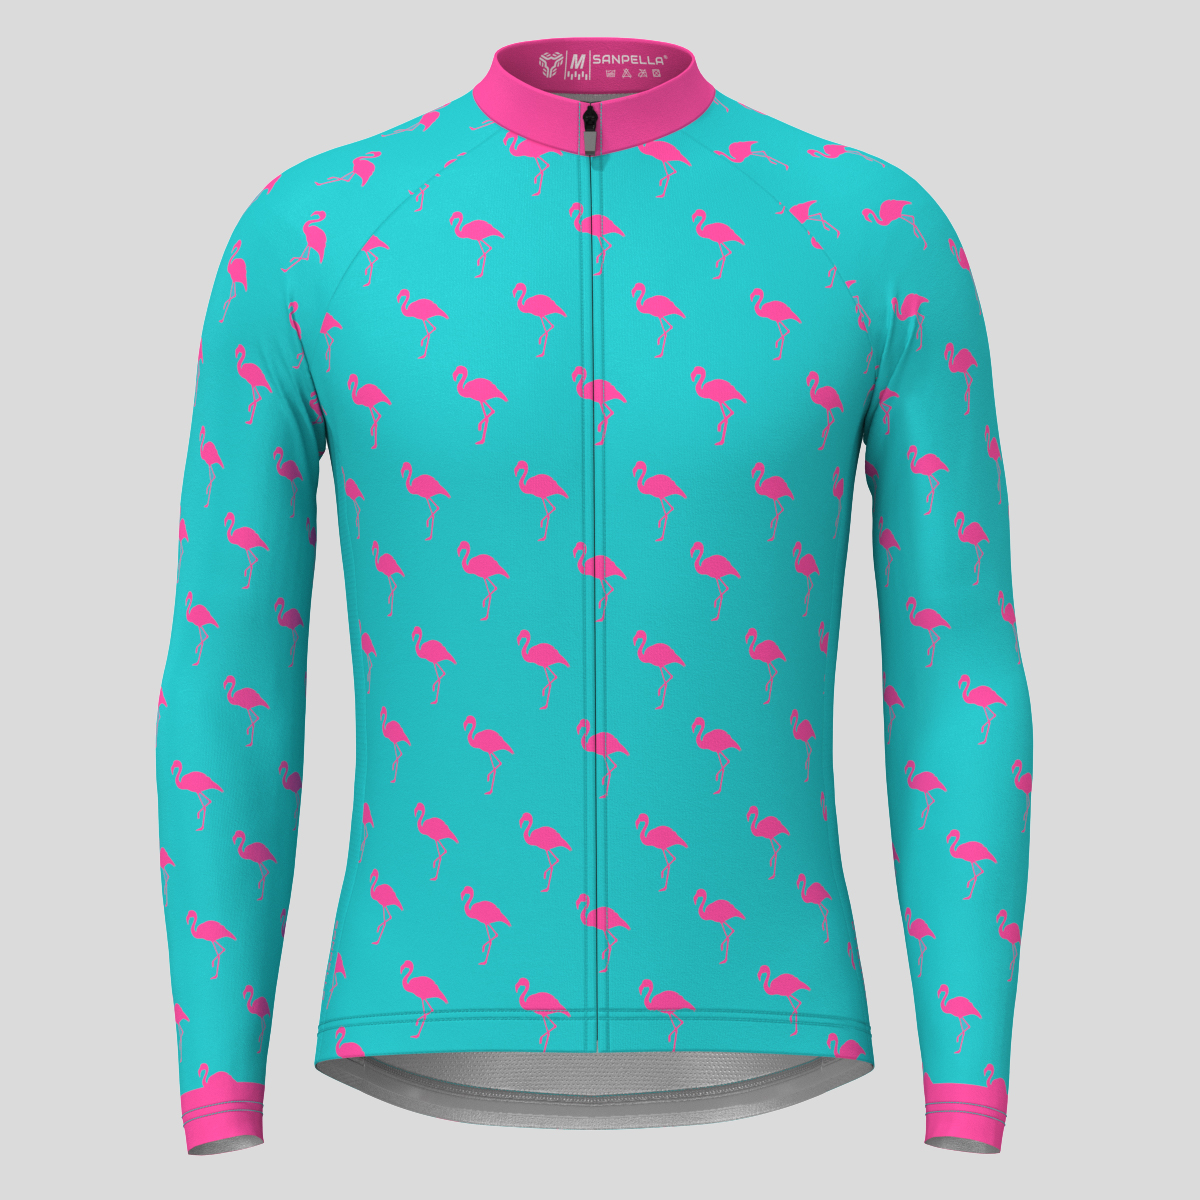 Flamingo Men's LS Cycling Jersey - Pink/Blue 